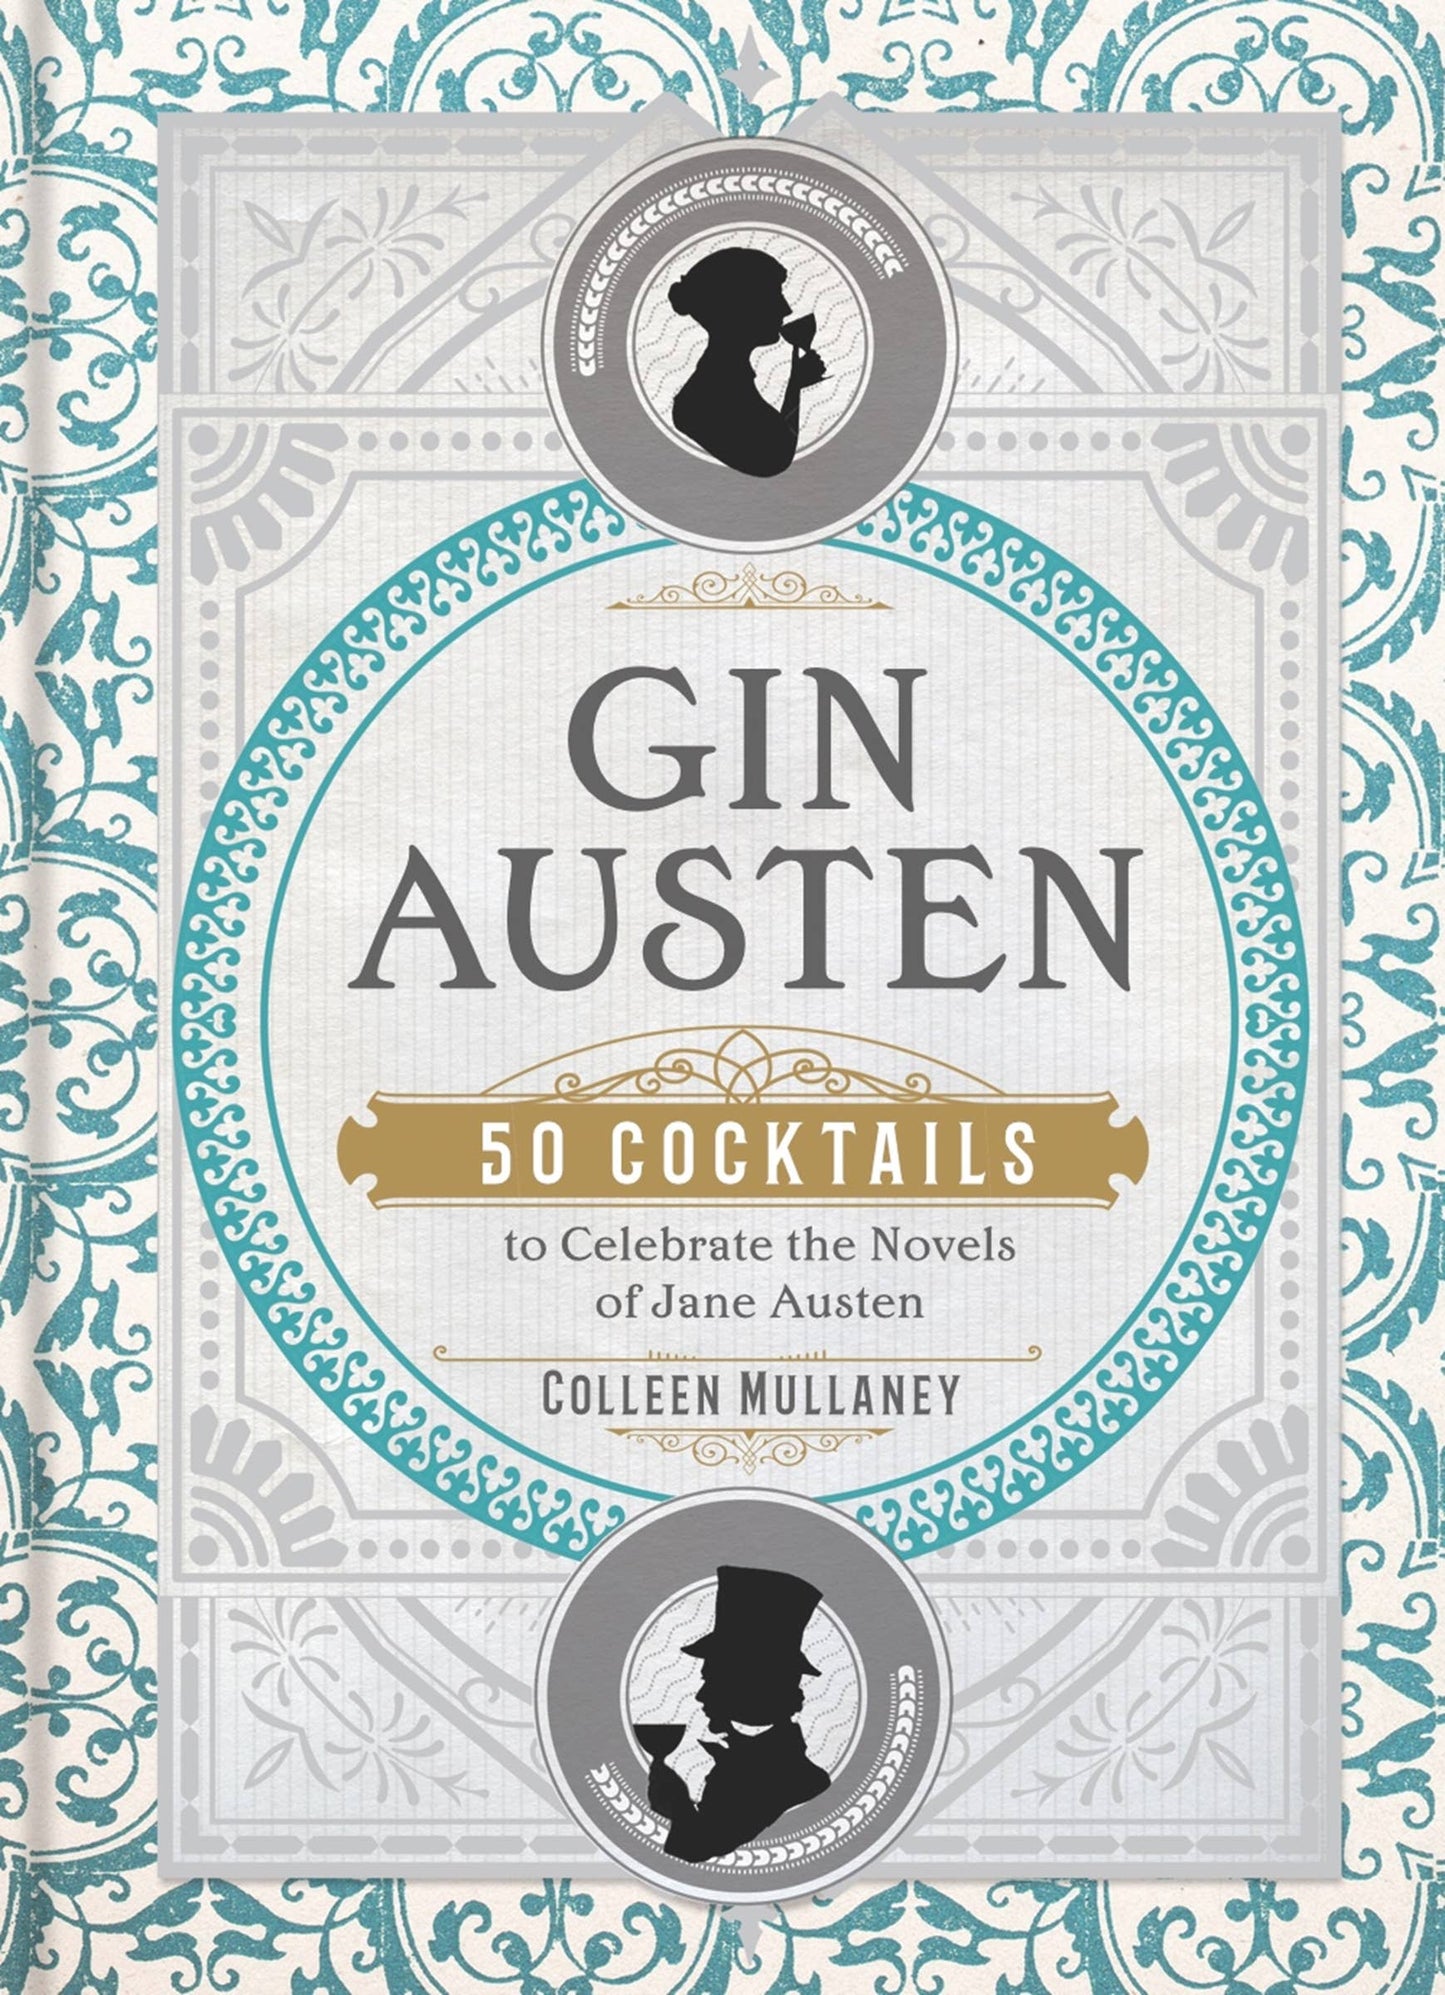 Gin Austen: 50 Cocktails Celebrating Jane Austin Novels